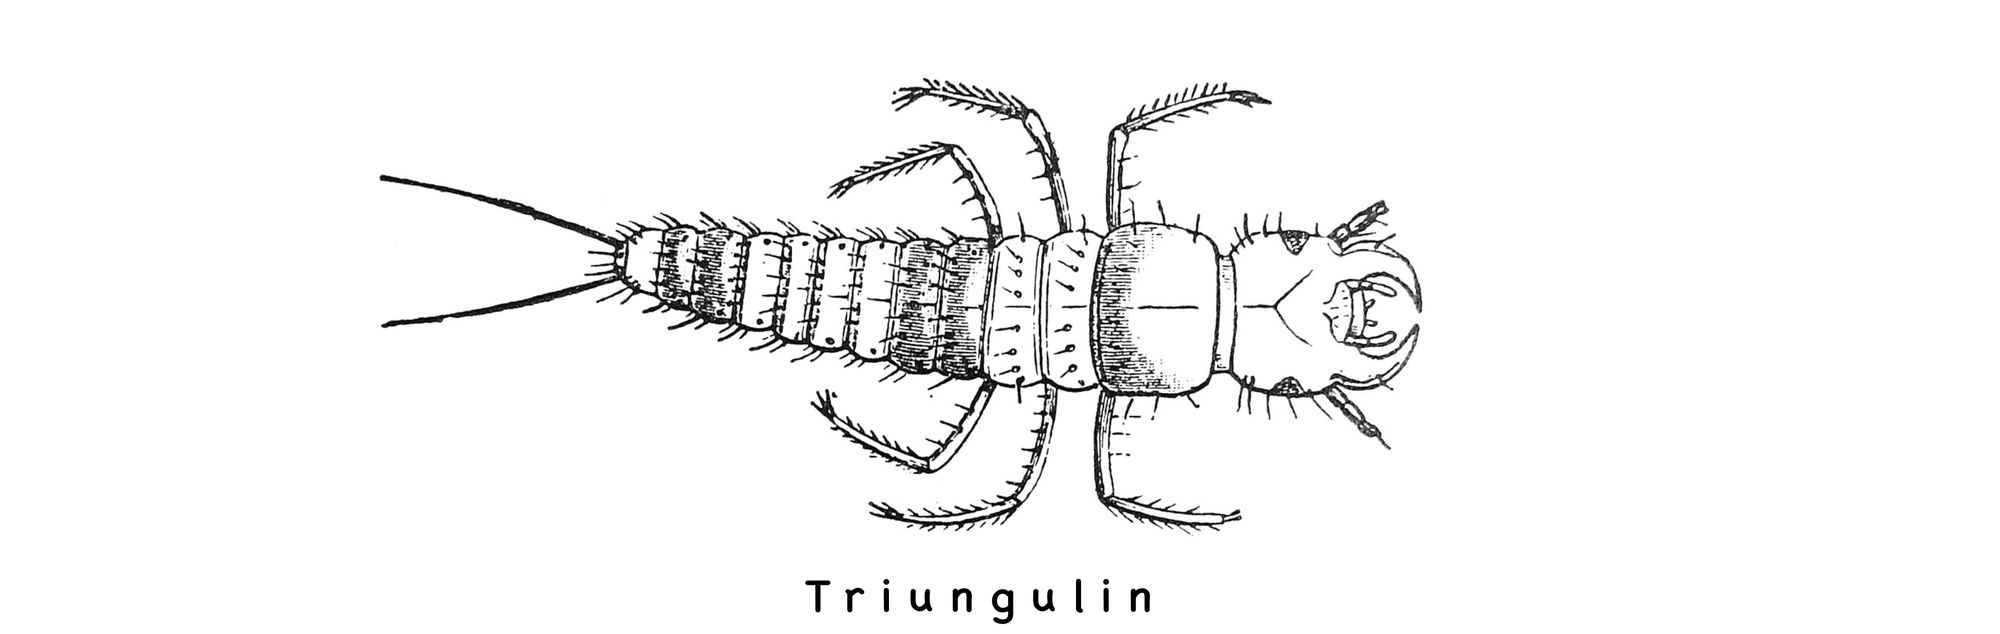 blister beetle triungulin